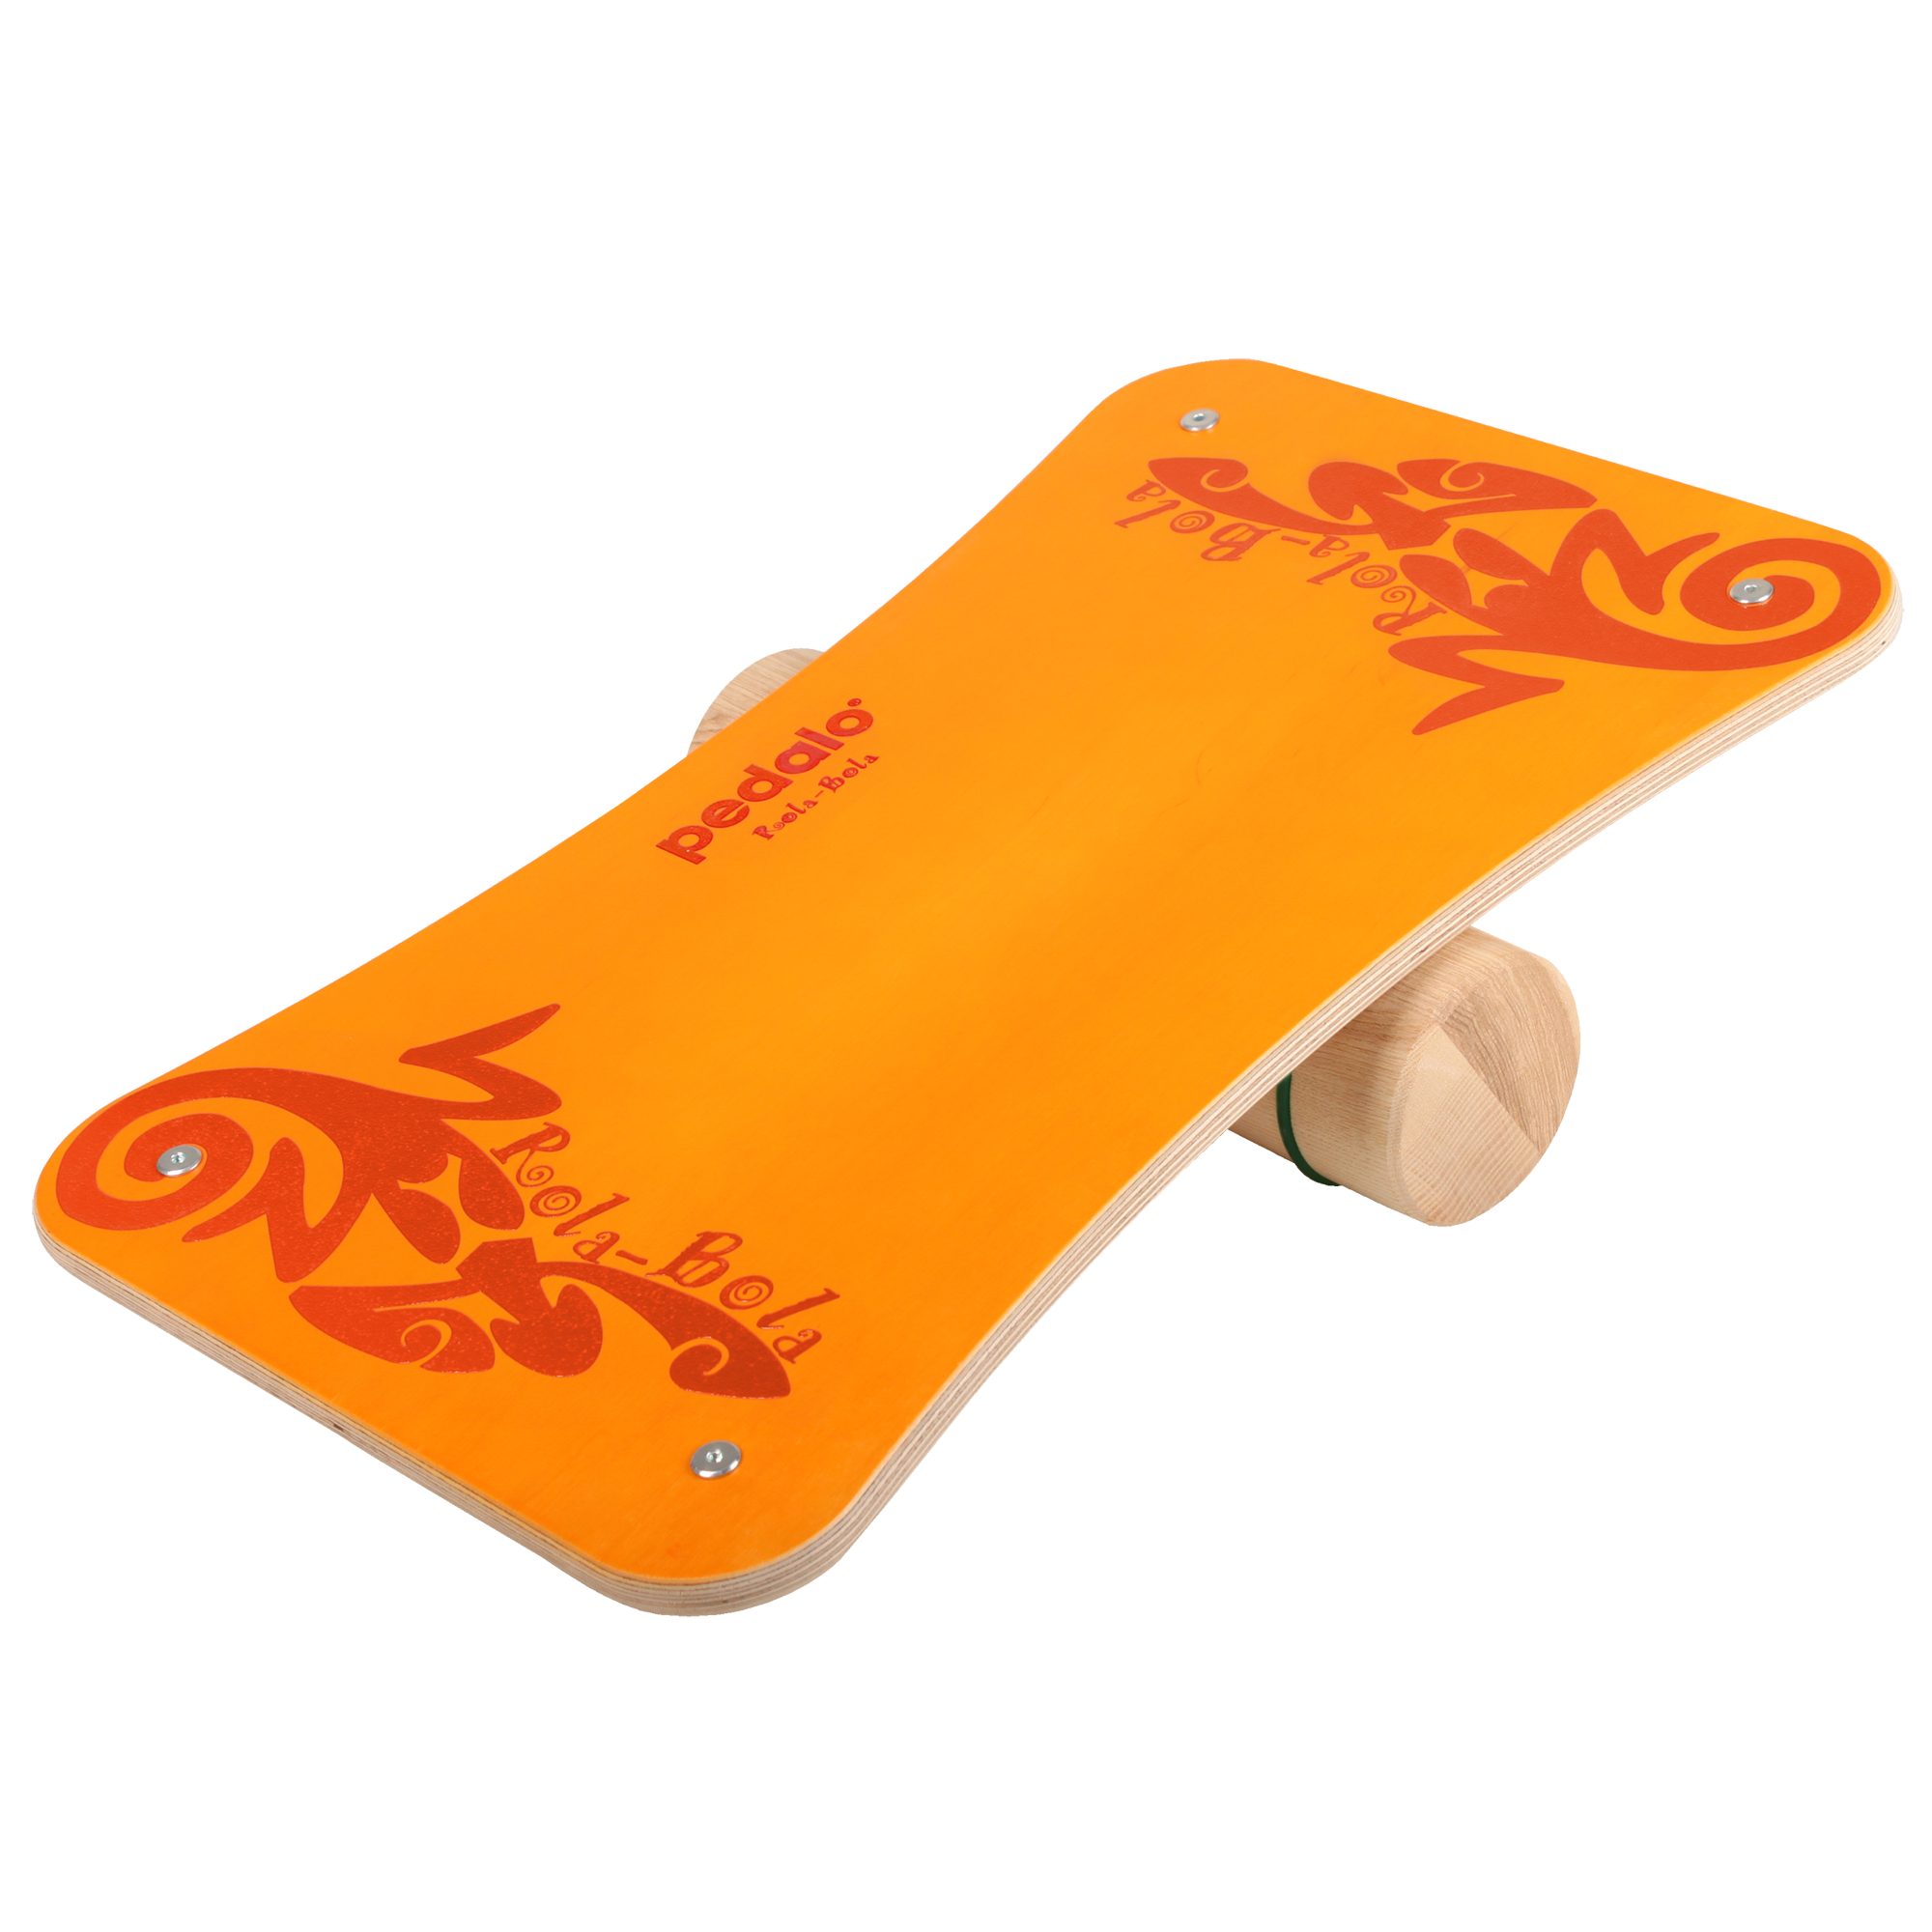 Reflextrainer Balanceboard, Pedalo Rola-Bola Balanceboard orange pedalo® Gleichgewichtstrainer,